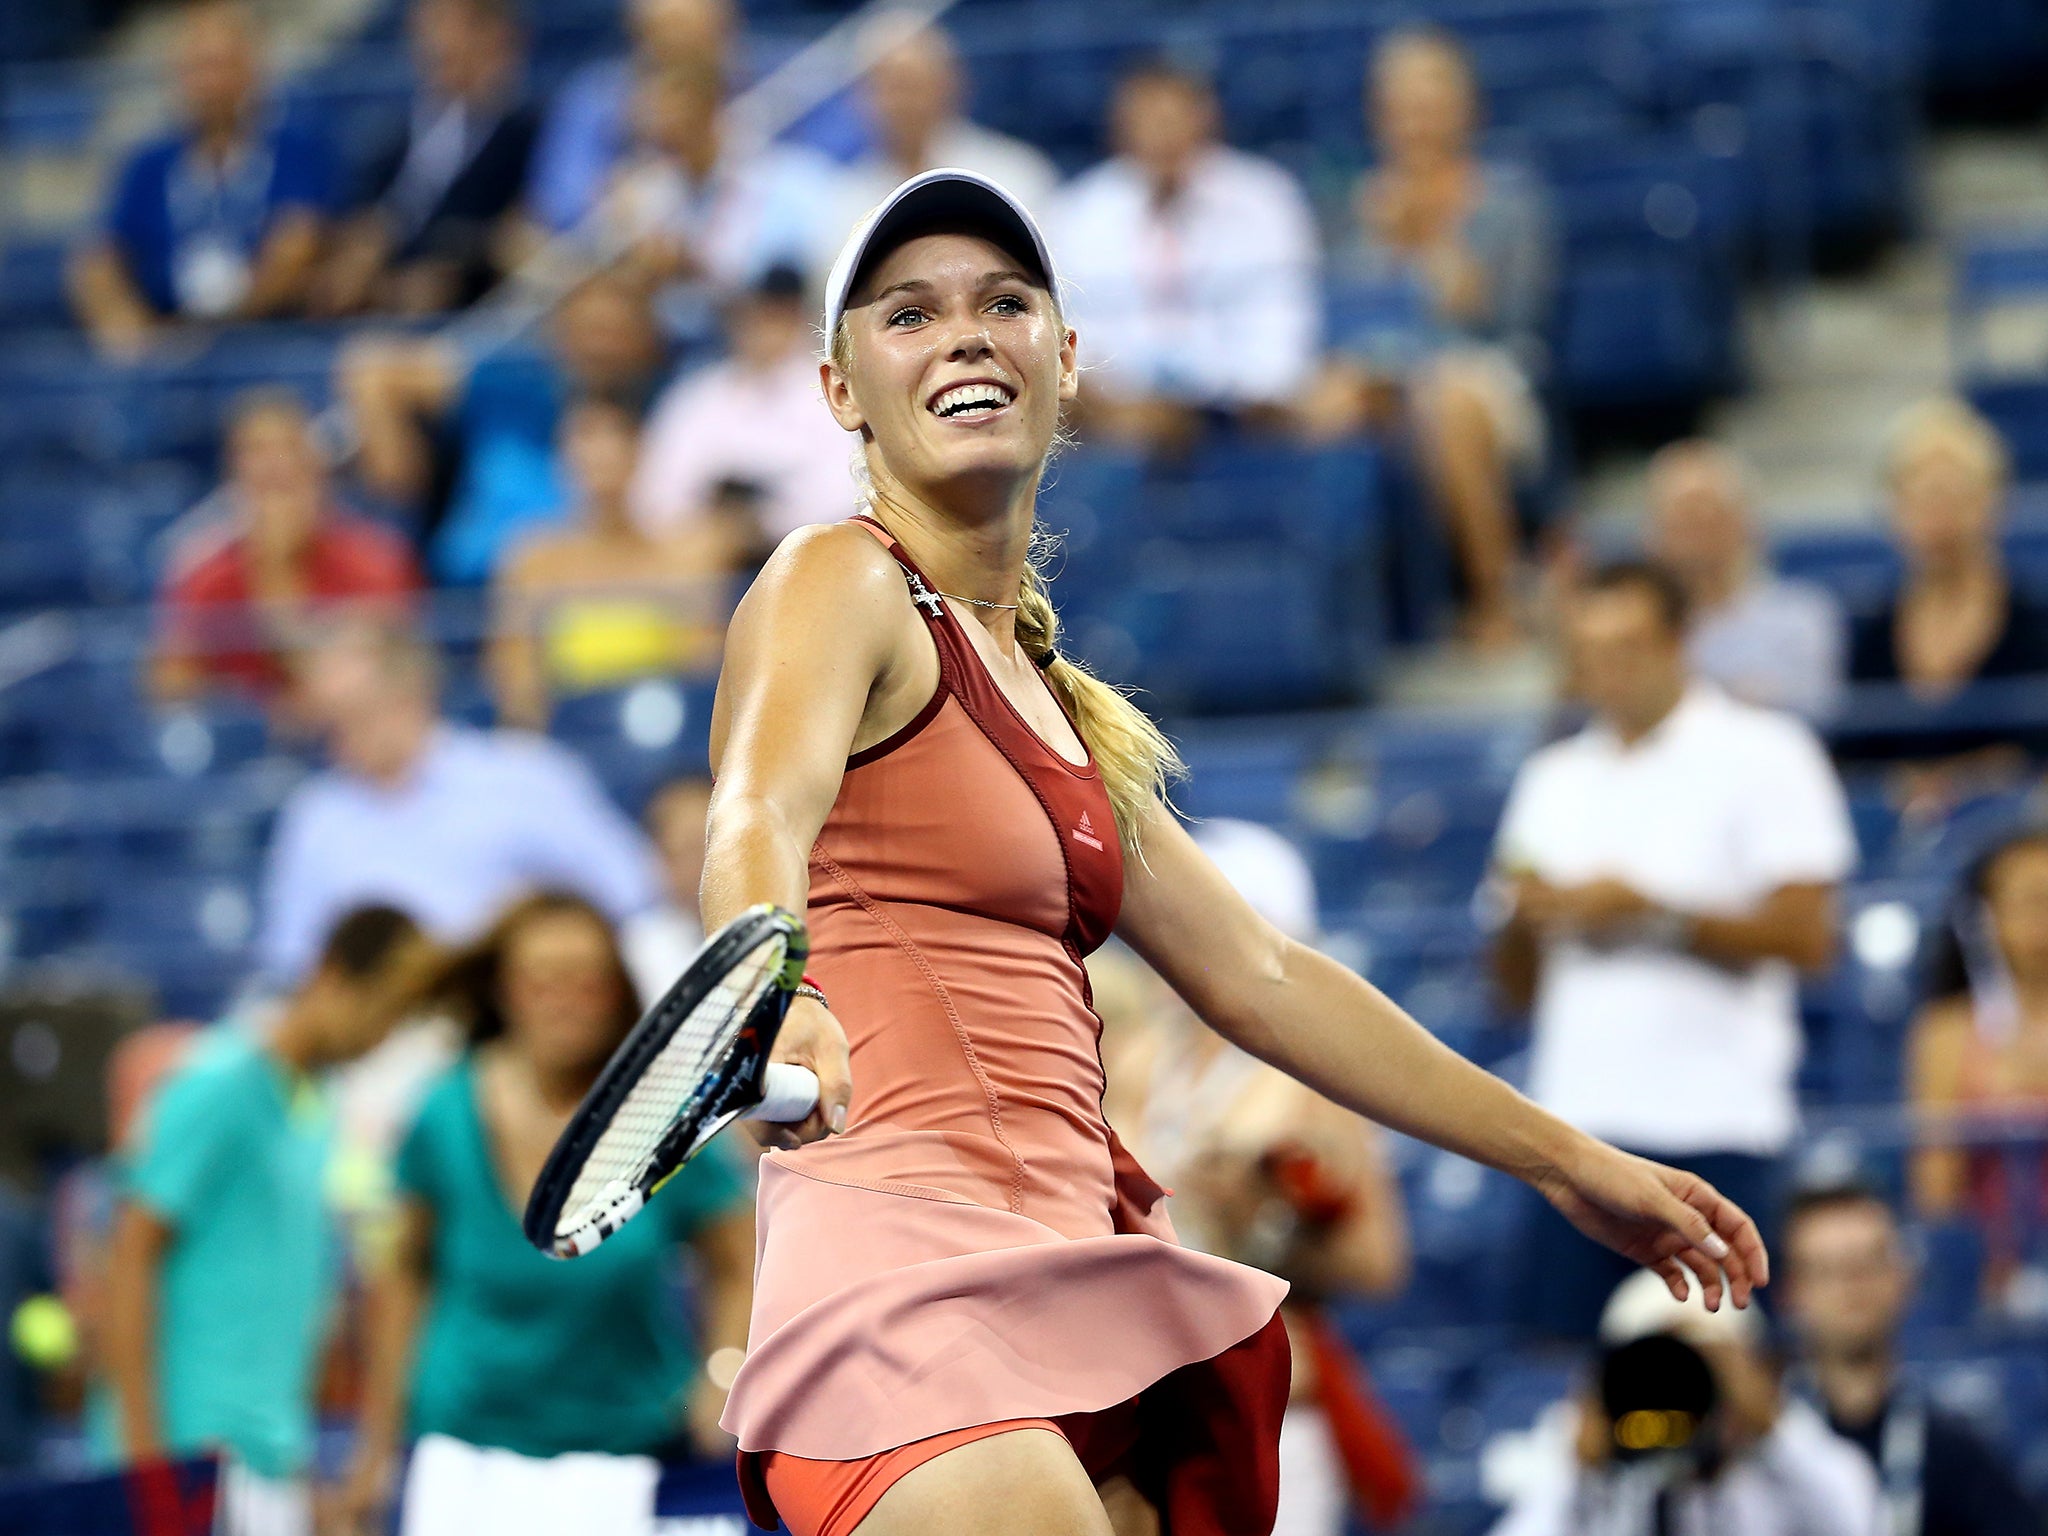 Caroline Wozniacki of Denmark celebrates after defeating Sara Errani of Italy in their women's singles quarter-final